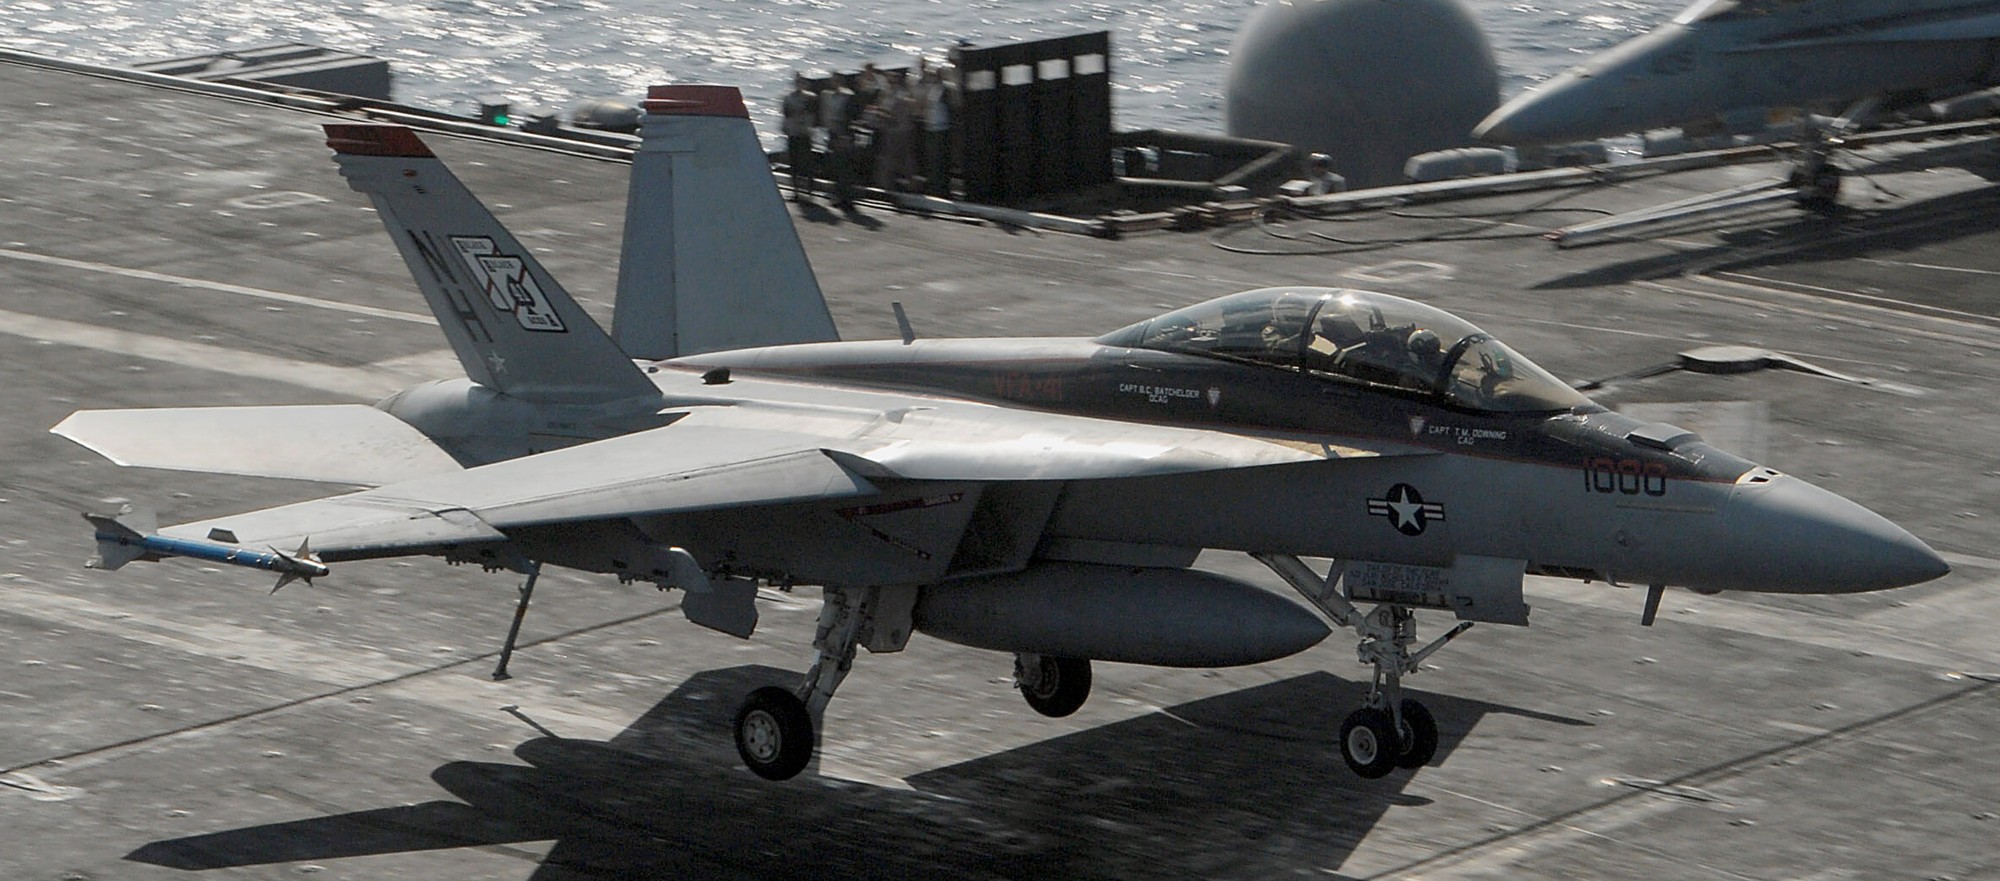 vfa-41 black aces strike fighter squadron f/a-18f super hornet cvw-11 cvn-68 uss nimitz us navy 209p